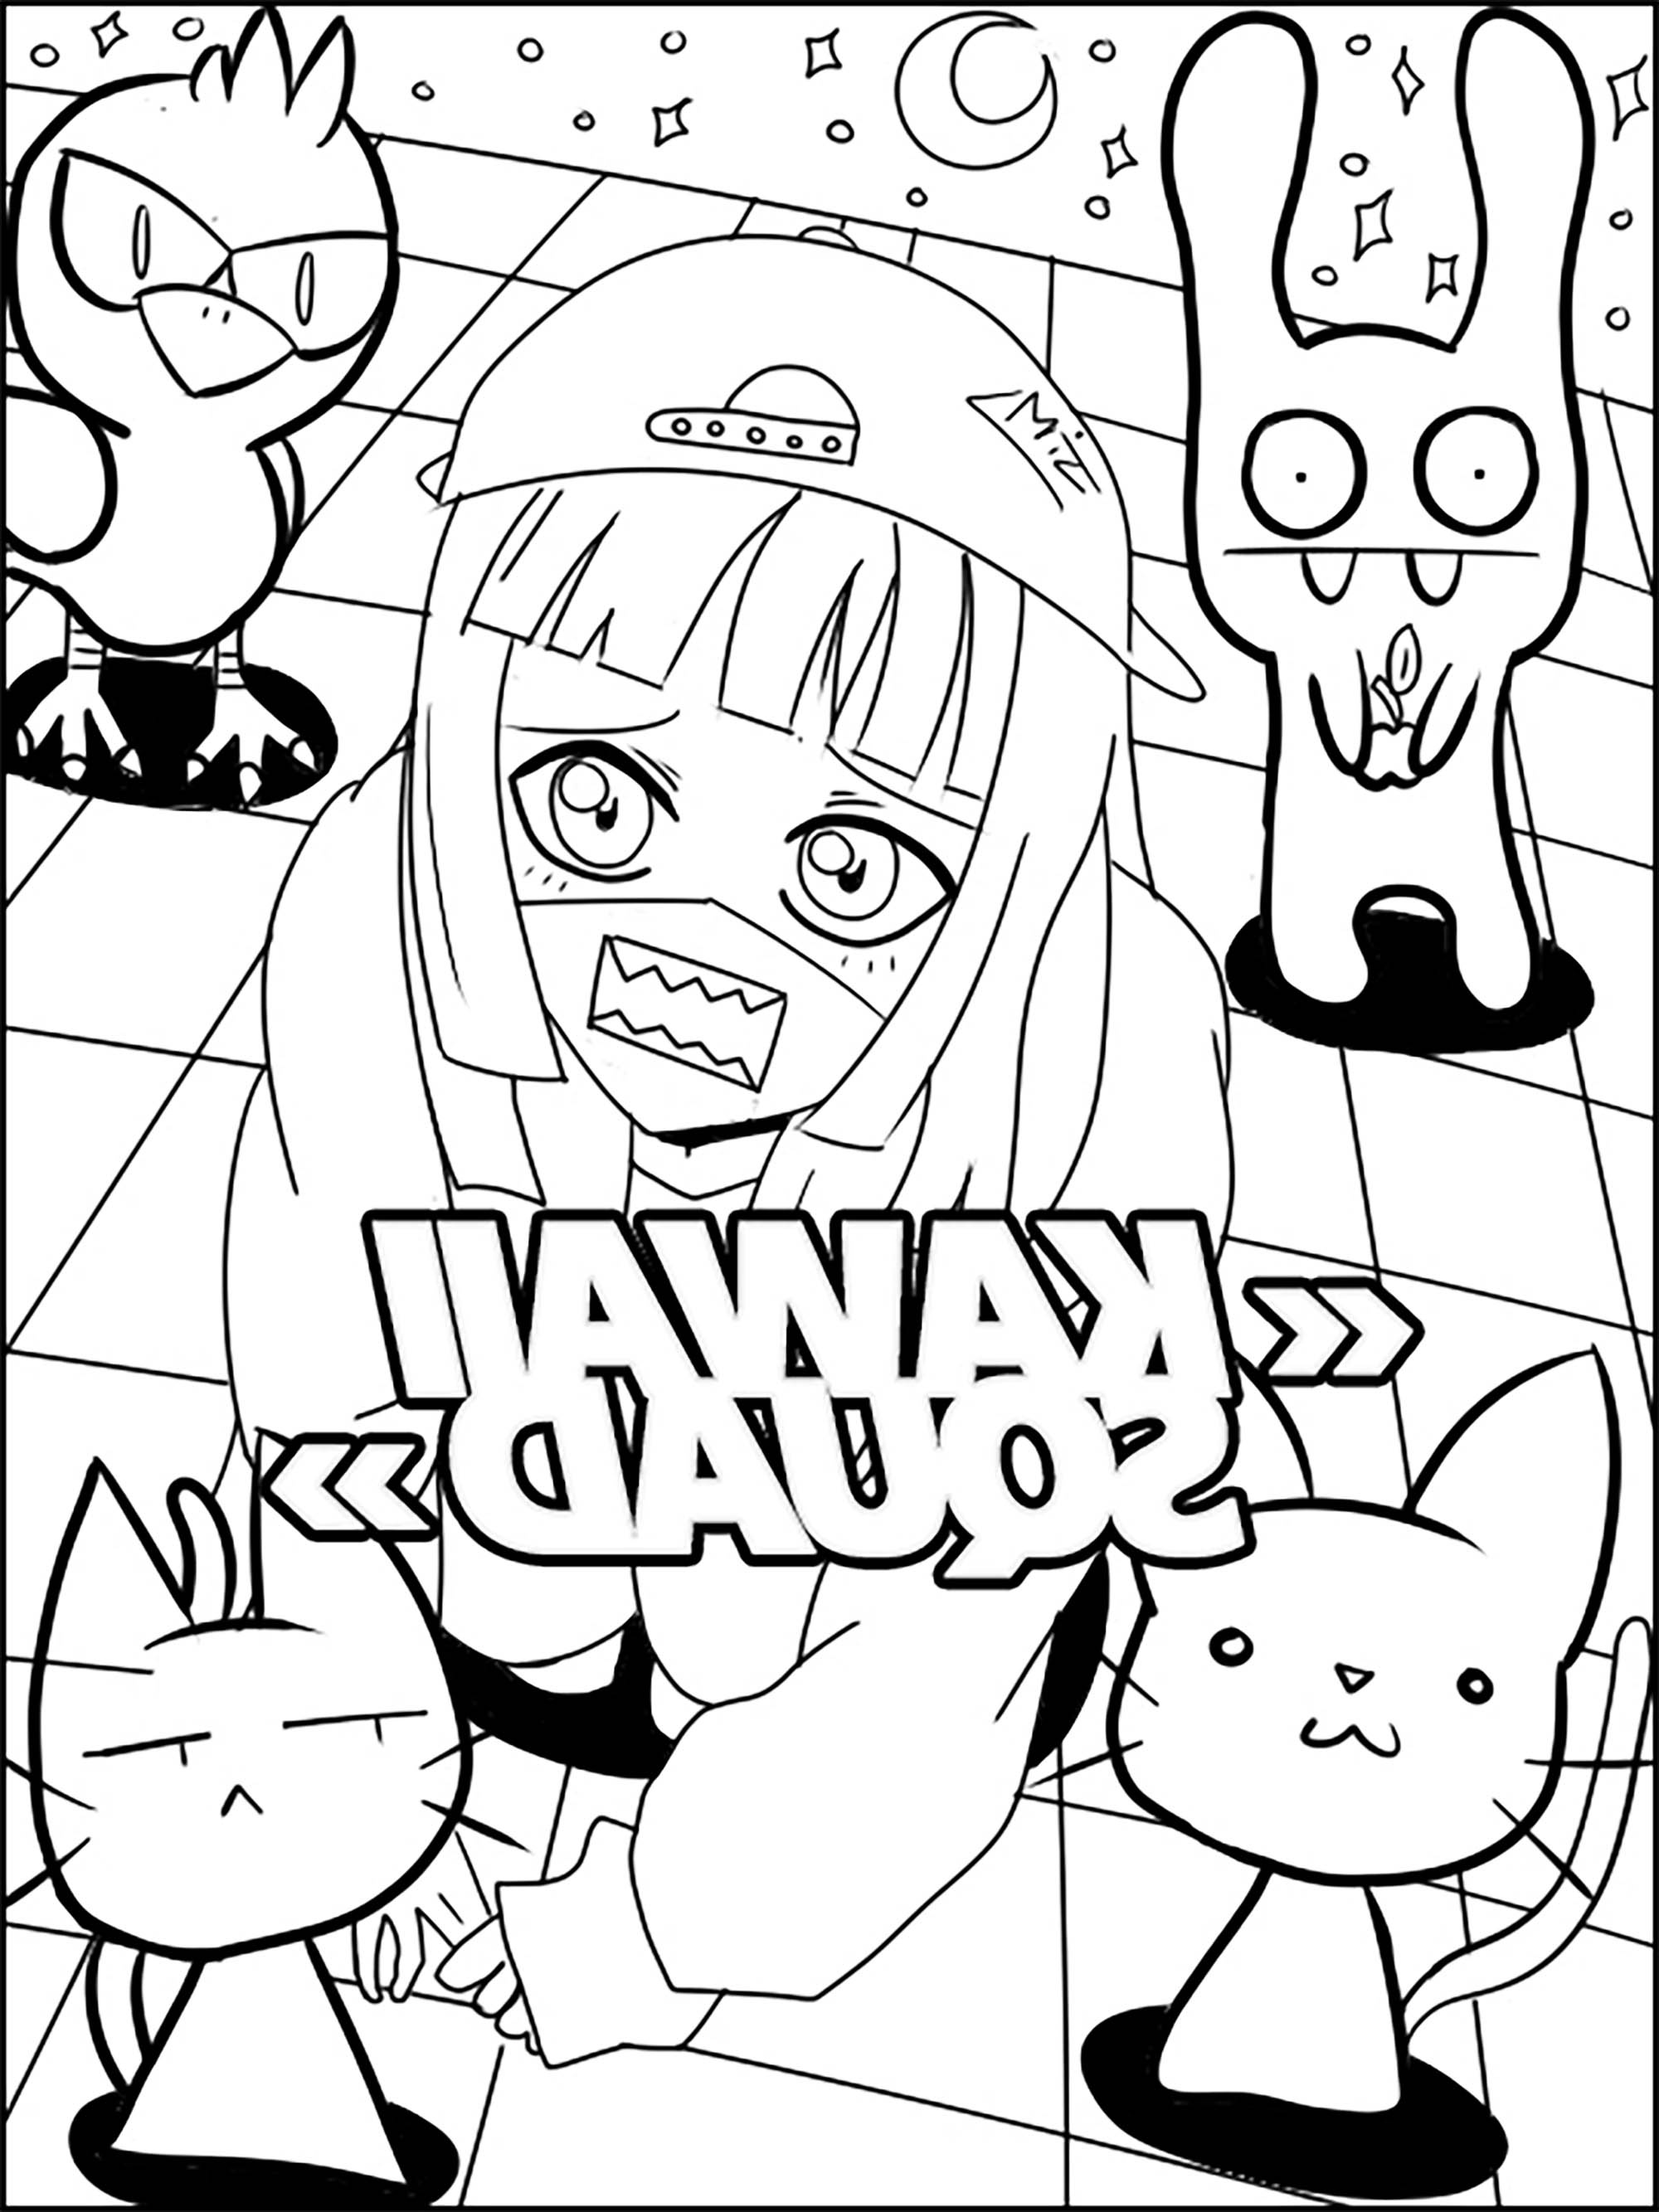 Dessin Kawaii A Imprimer Animaux Beau Photos Kawaii Squad Coloriage Kawaii Coloriages Pour Enfants